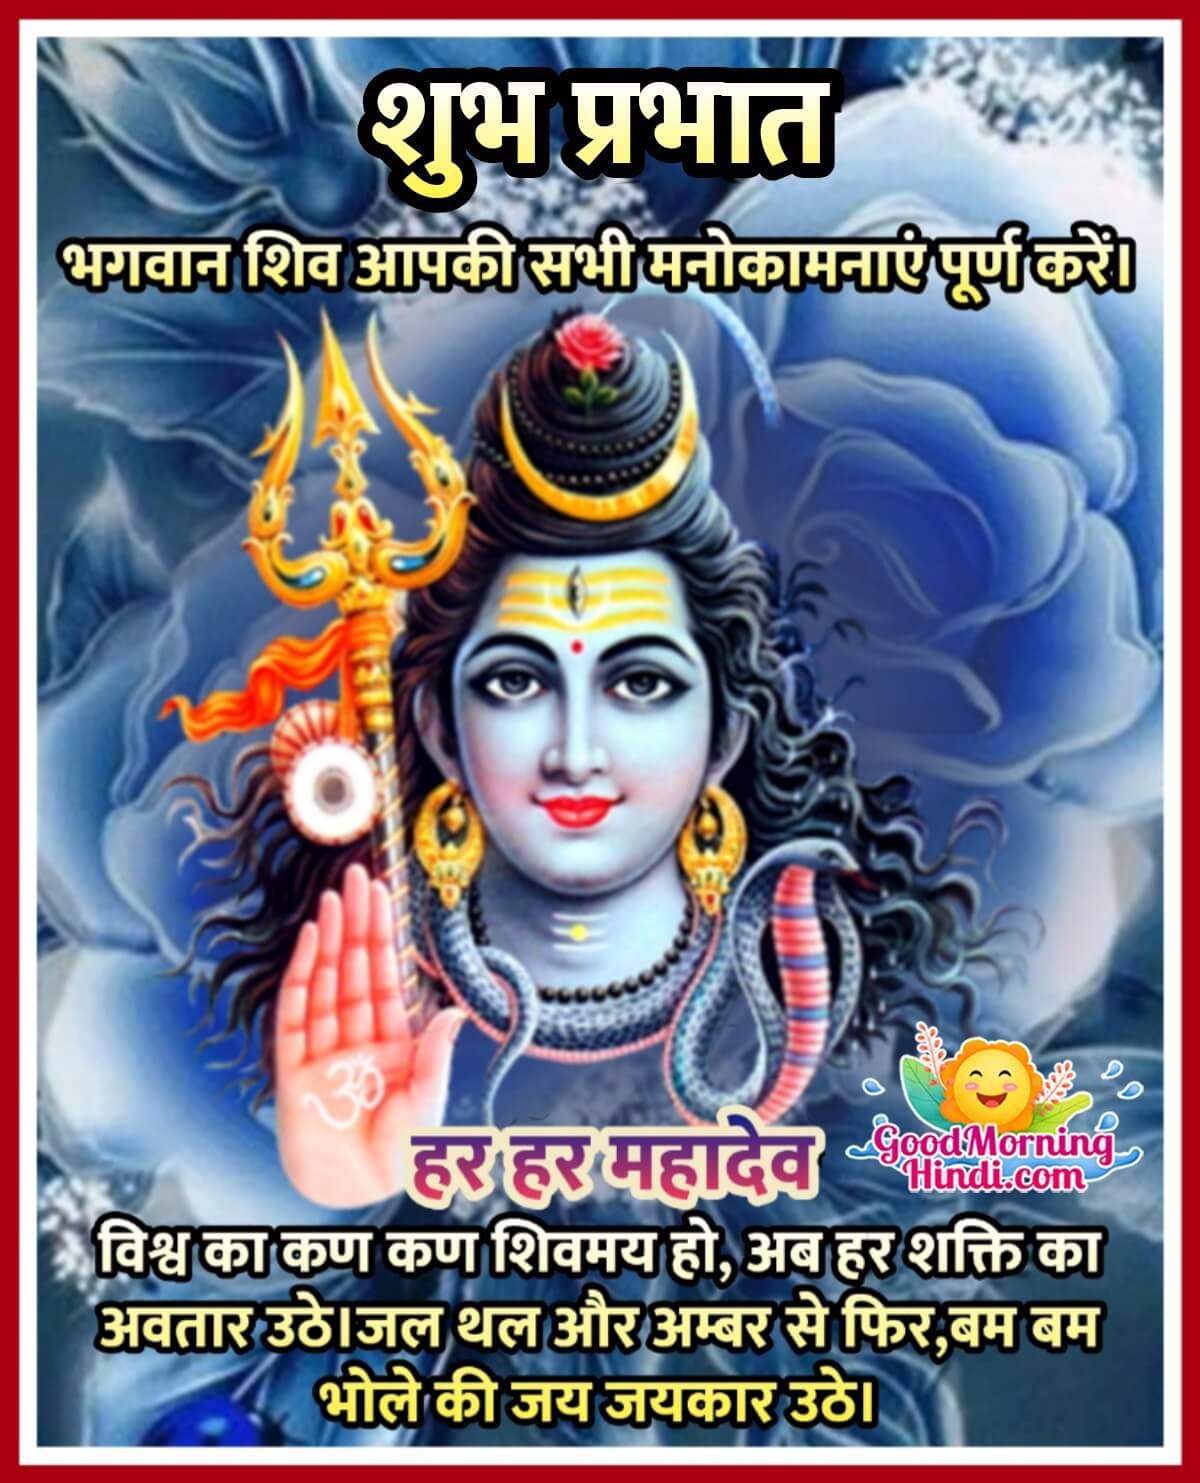 Good Morning Shiva Images In Hindi - Good Morning Wishes & Images In Hindi